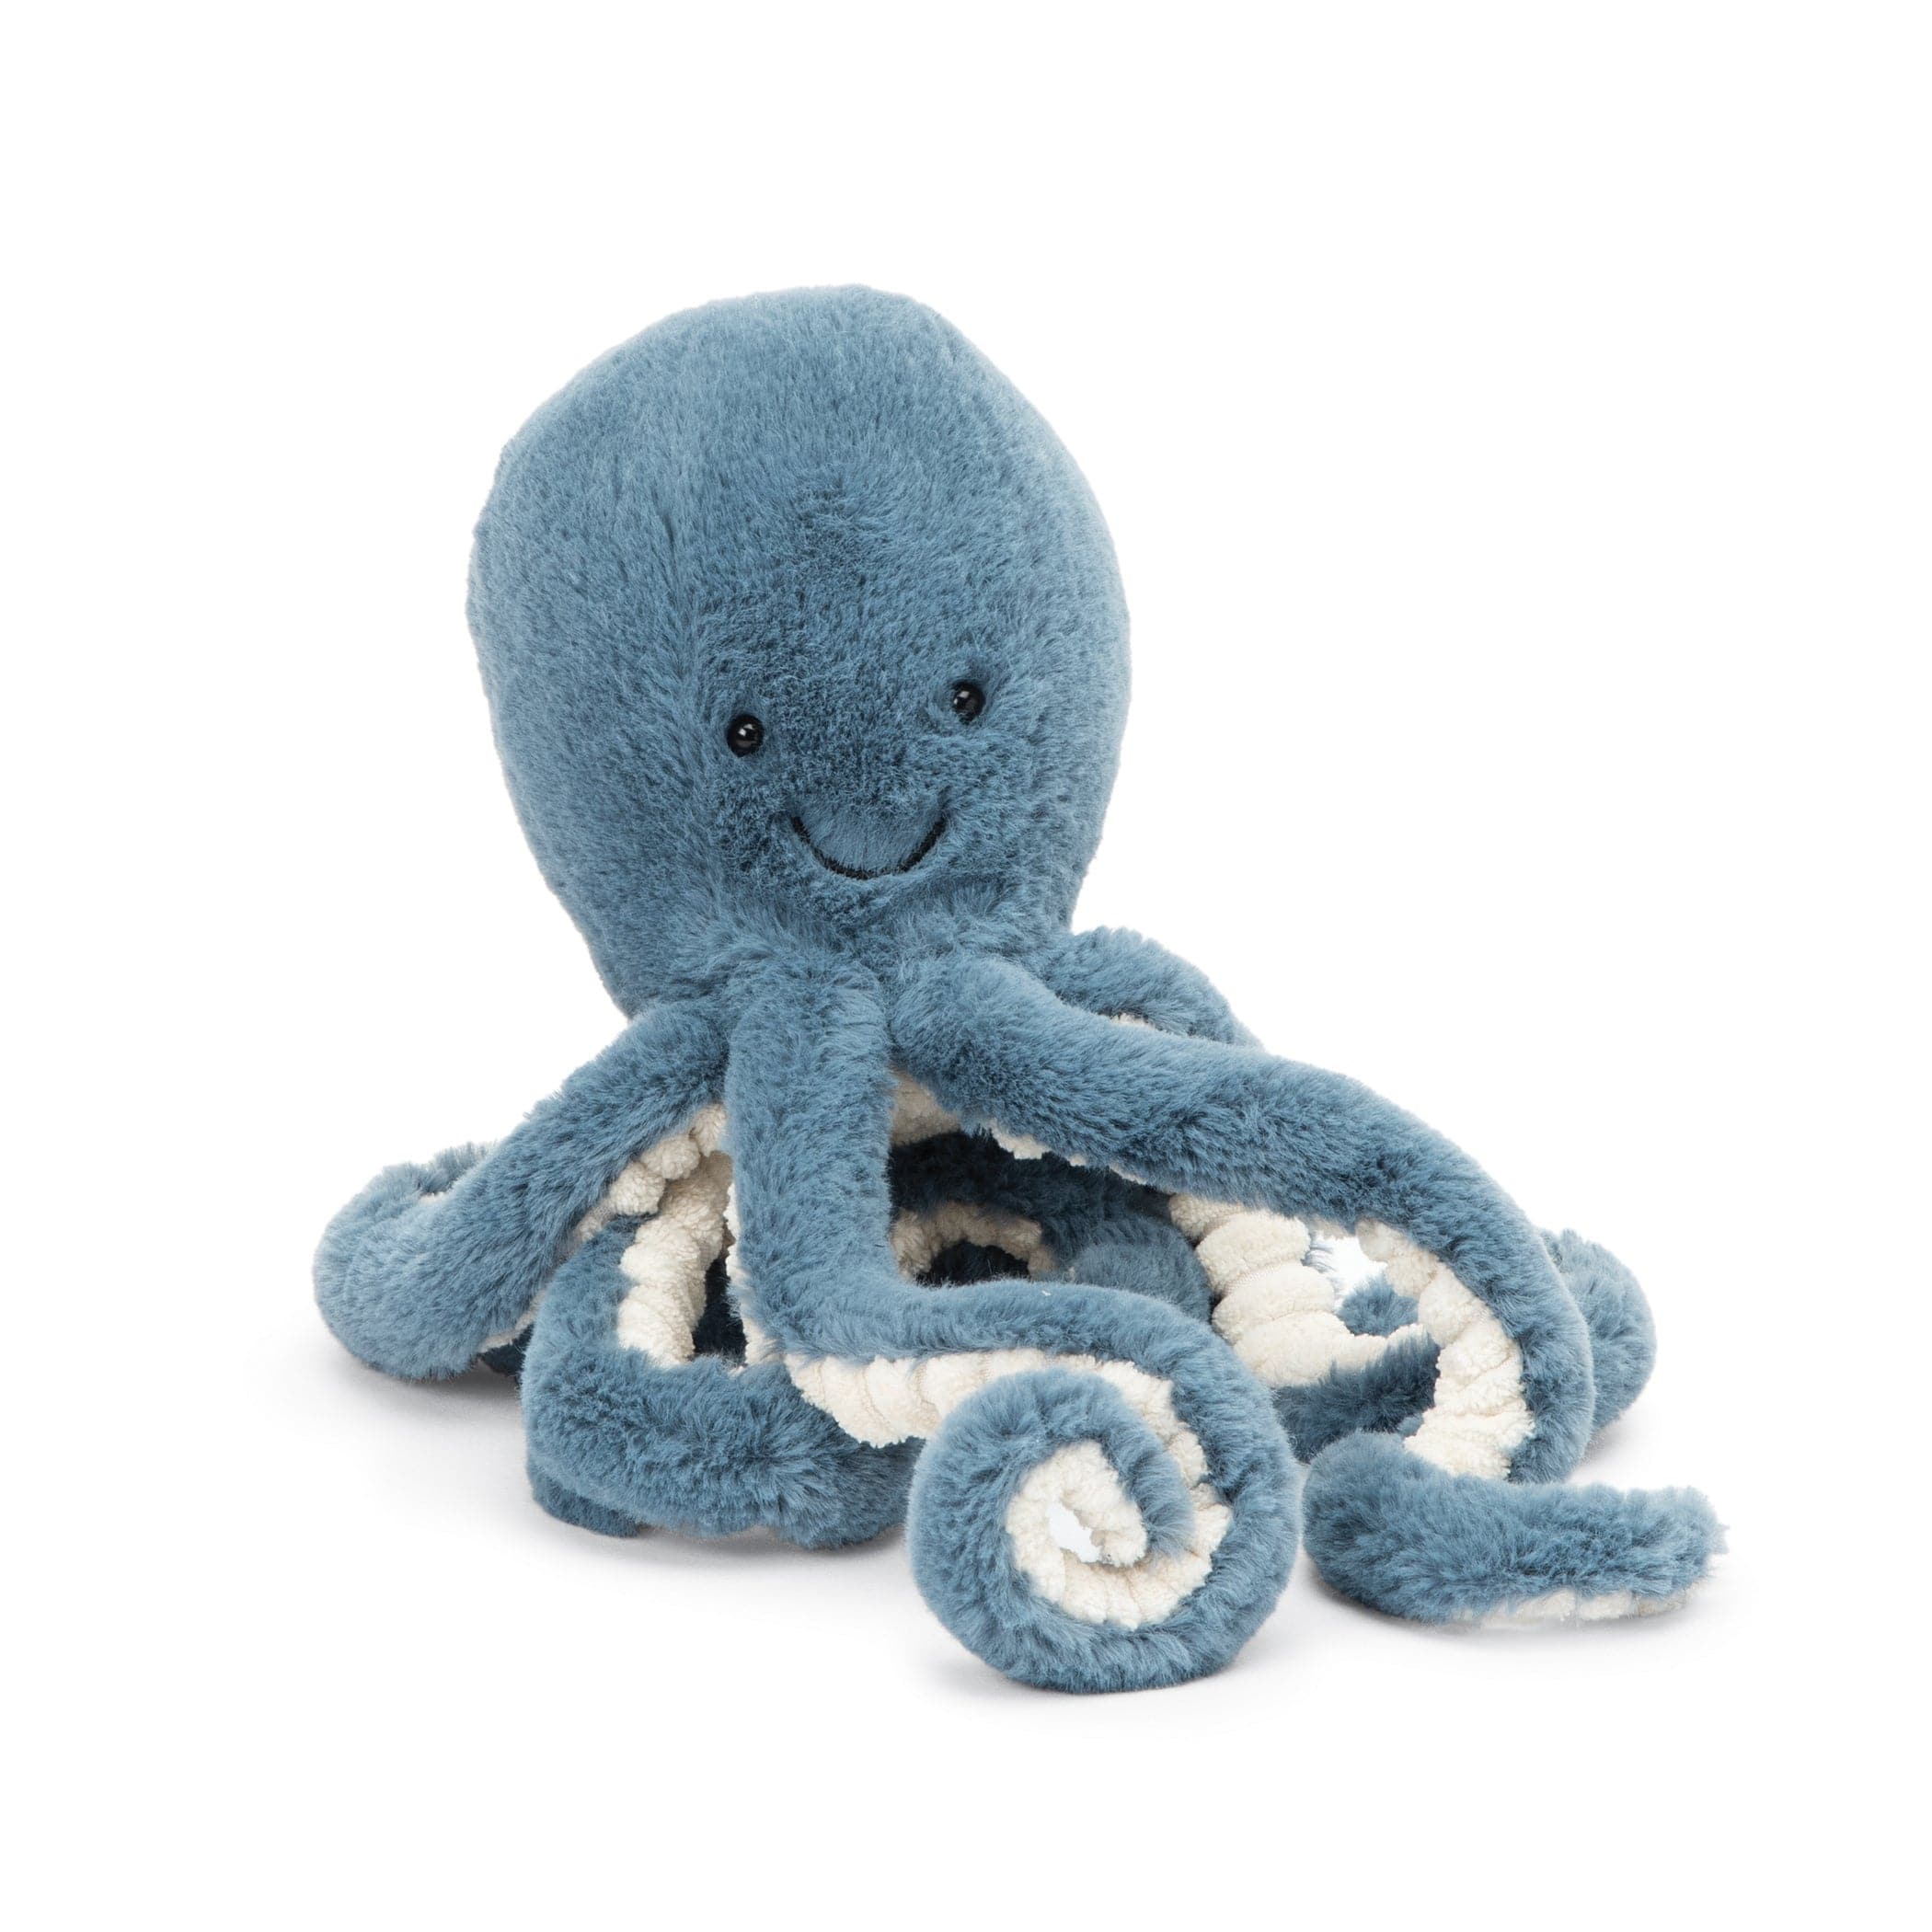 Jellycat-Ocean Life Octopus-11126-Storm-Large 22